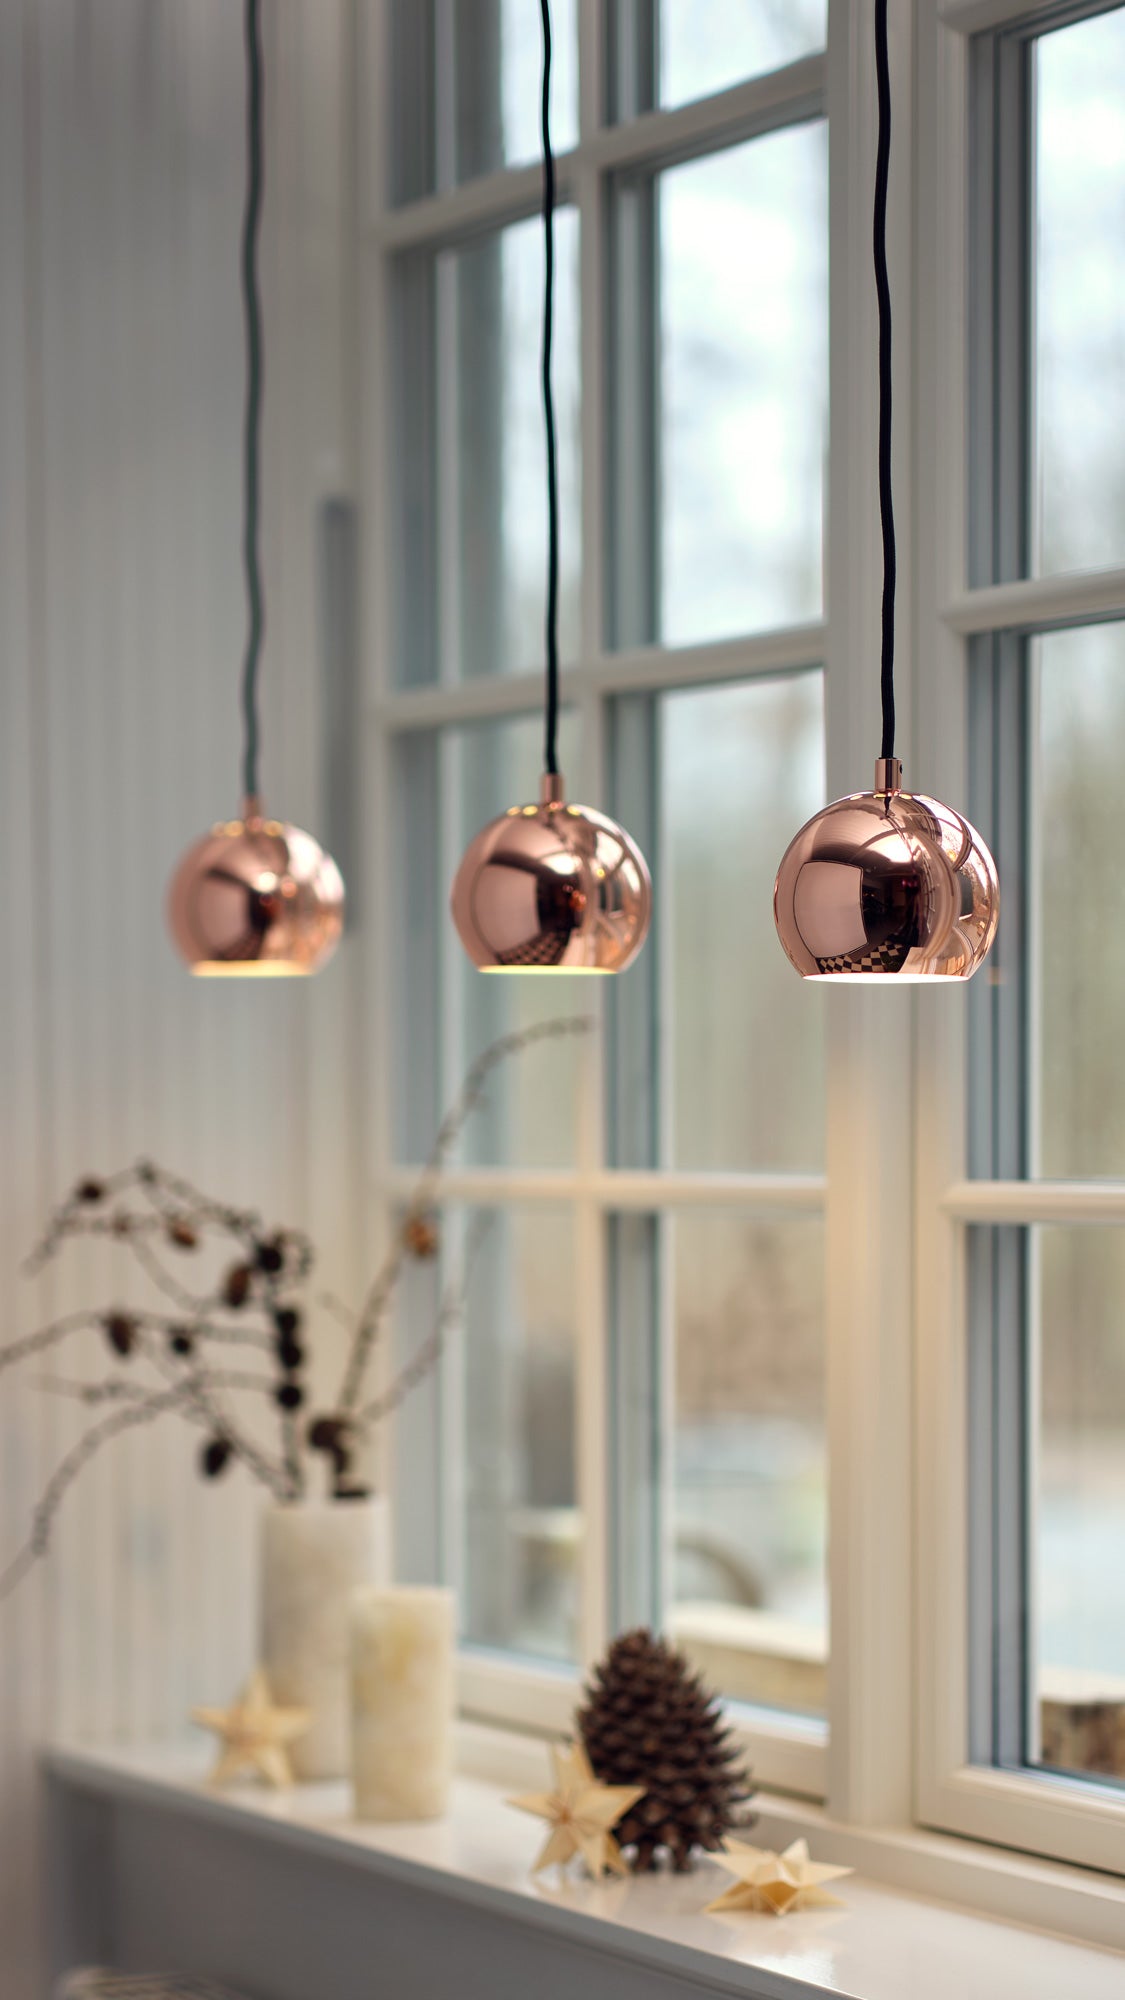 Frandsen Ball Pendel Ø18 - Solid Glossy Copper